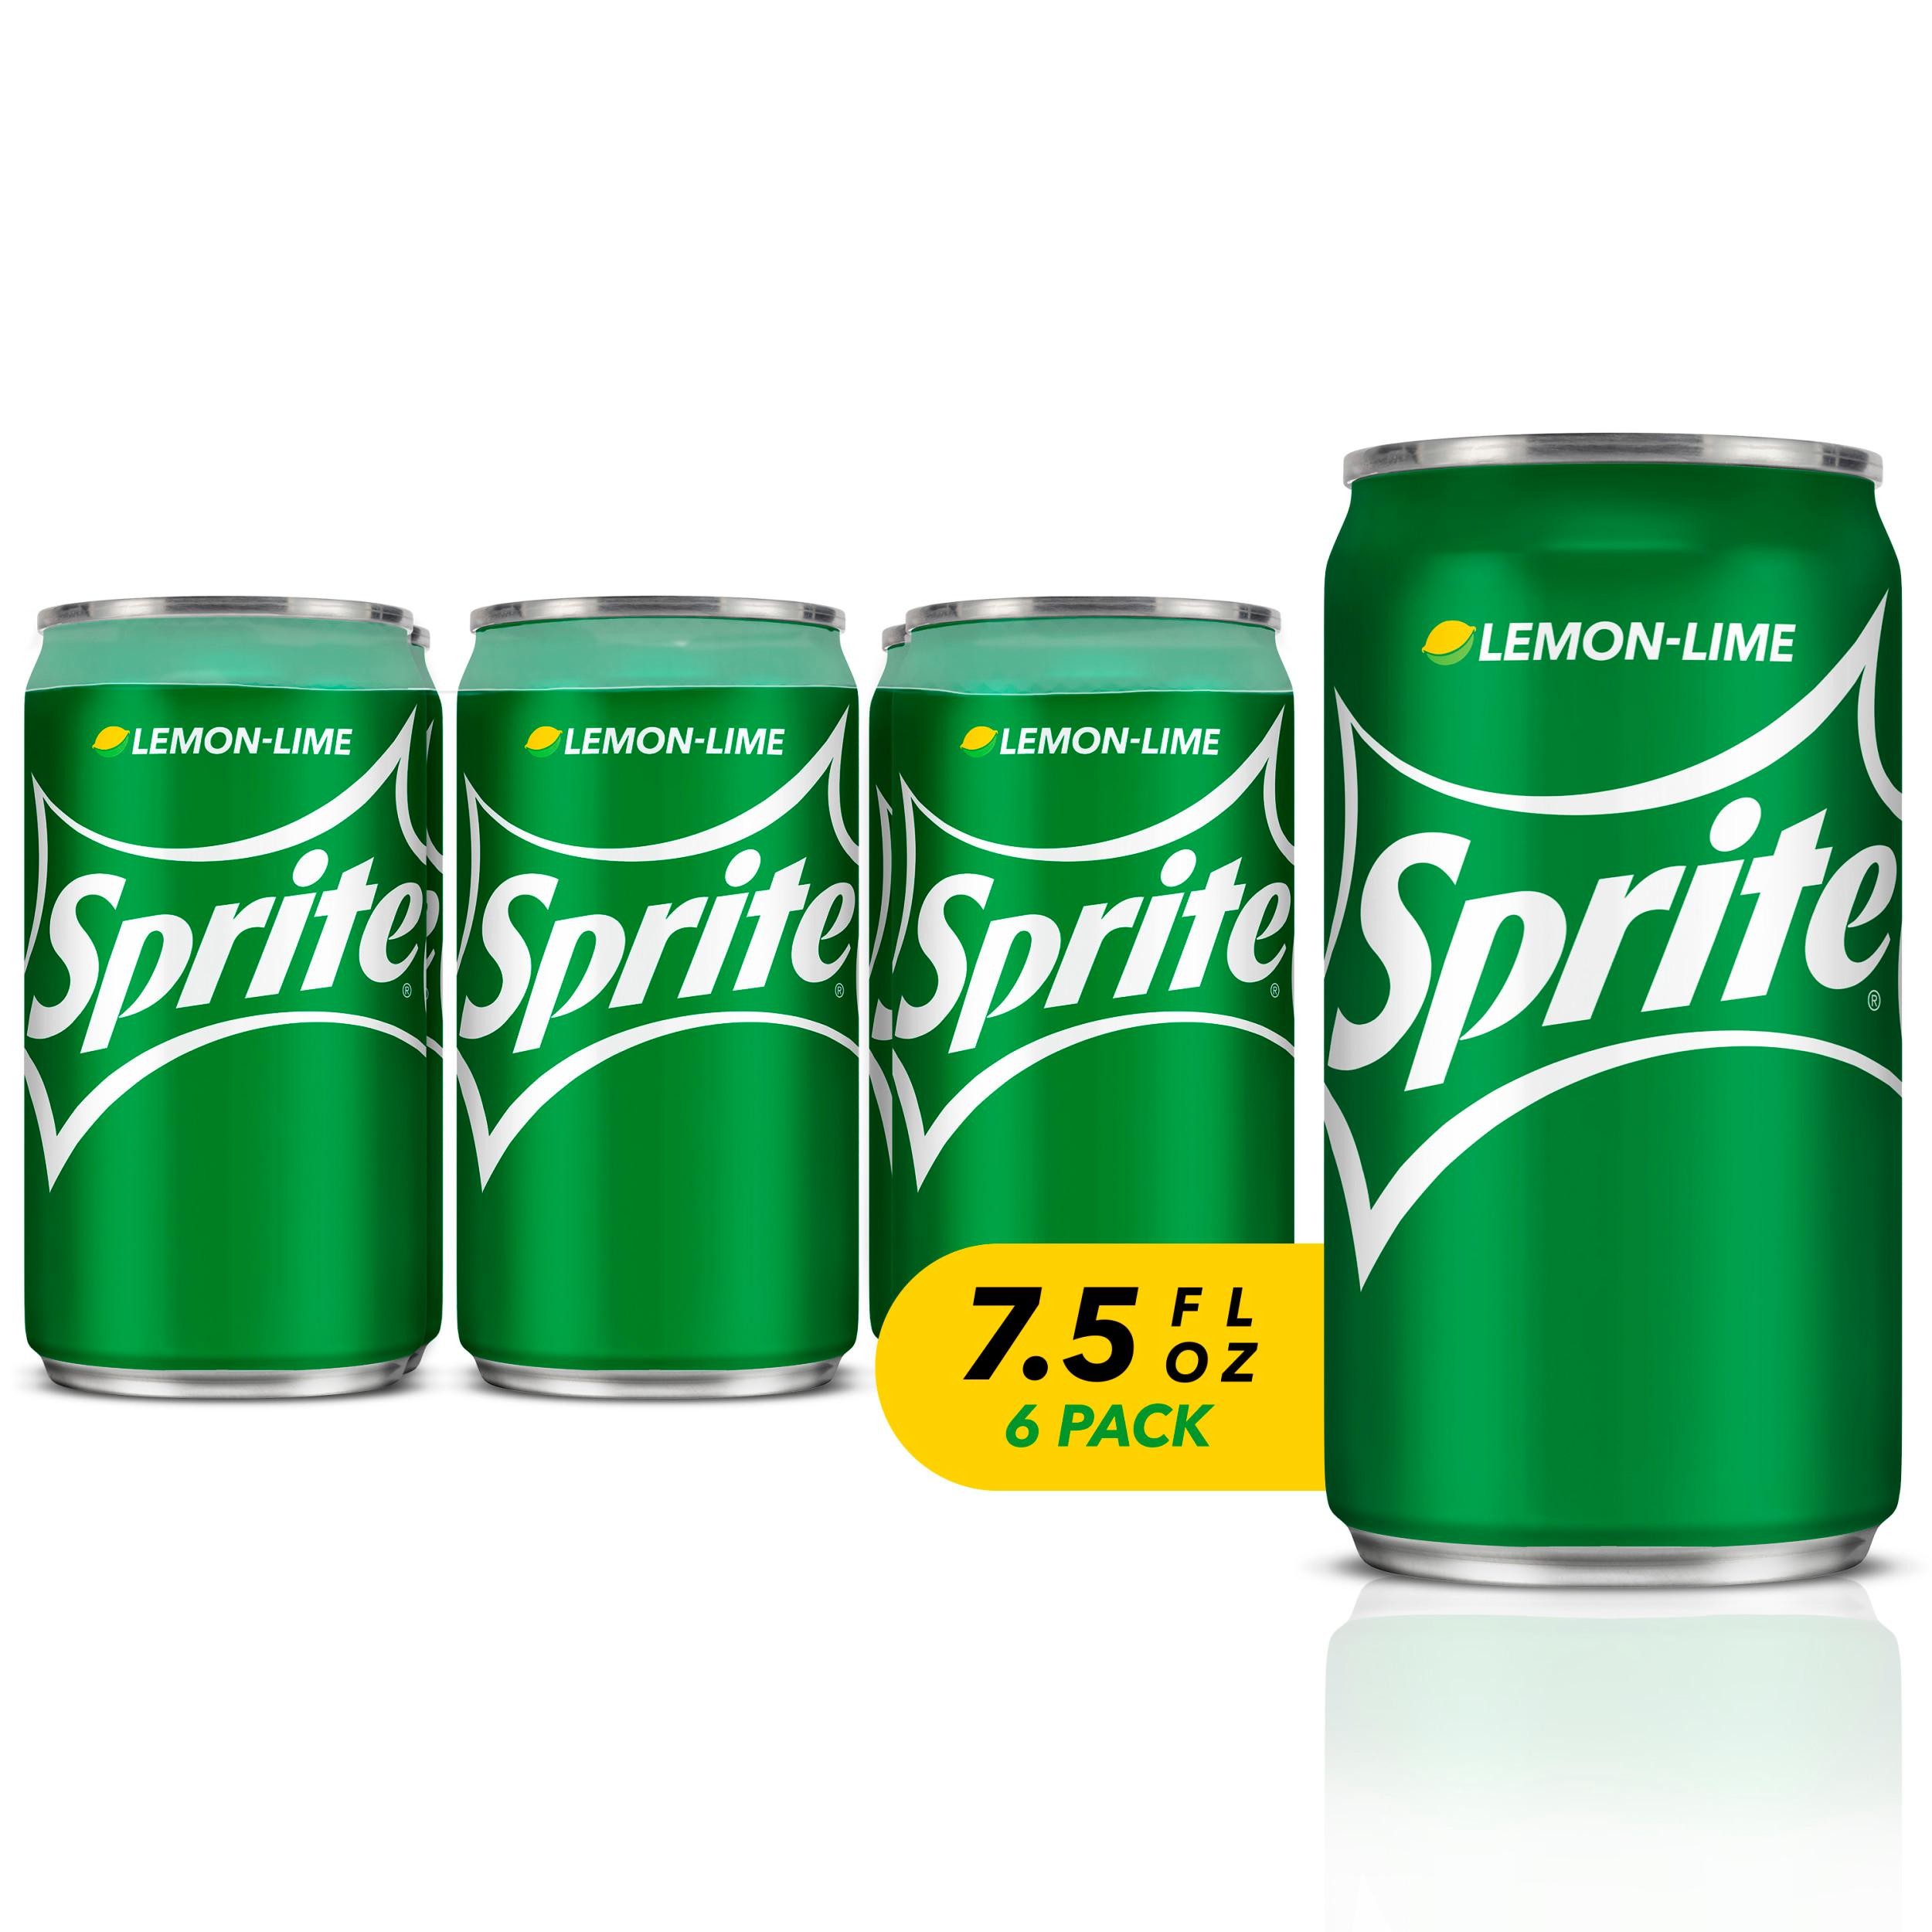 Sprite Soda, Lemon-Lime - 7.5 Fl Oz X 6 Pack